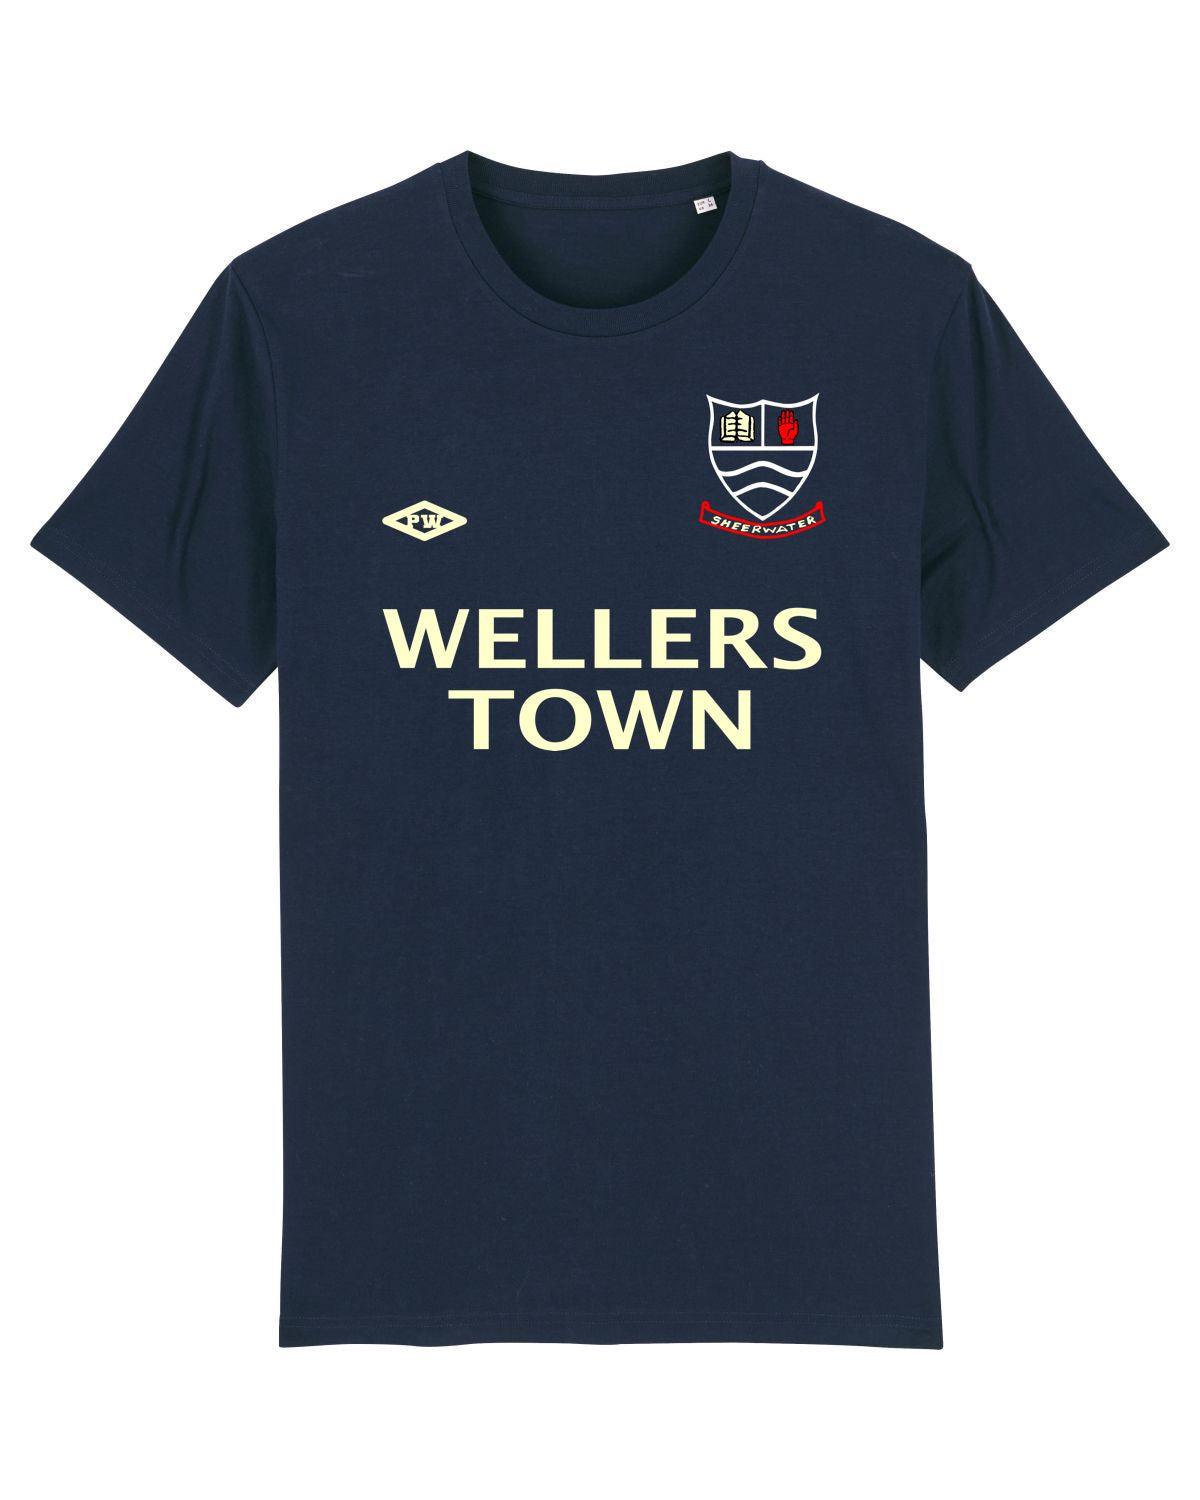 WELLERS TOWN: T-Shirt Inspired by The Jam, Paul Weller, Black Barn Studios